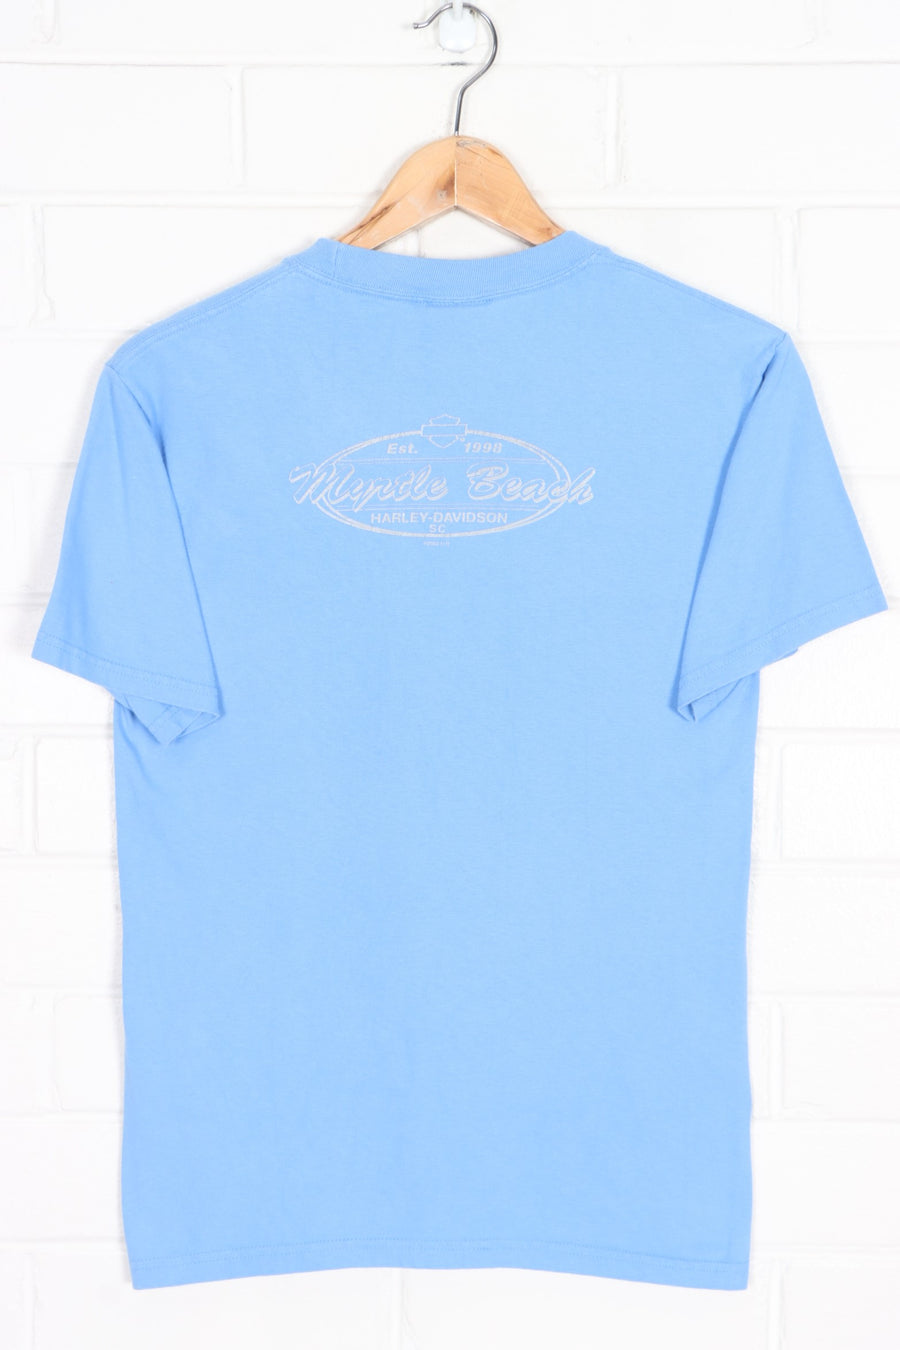 HARLEY DAVIDSON Myrtle Beach Metallic Silver Logo Blue T-Shirt (XS)